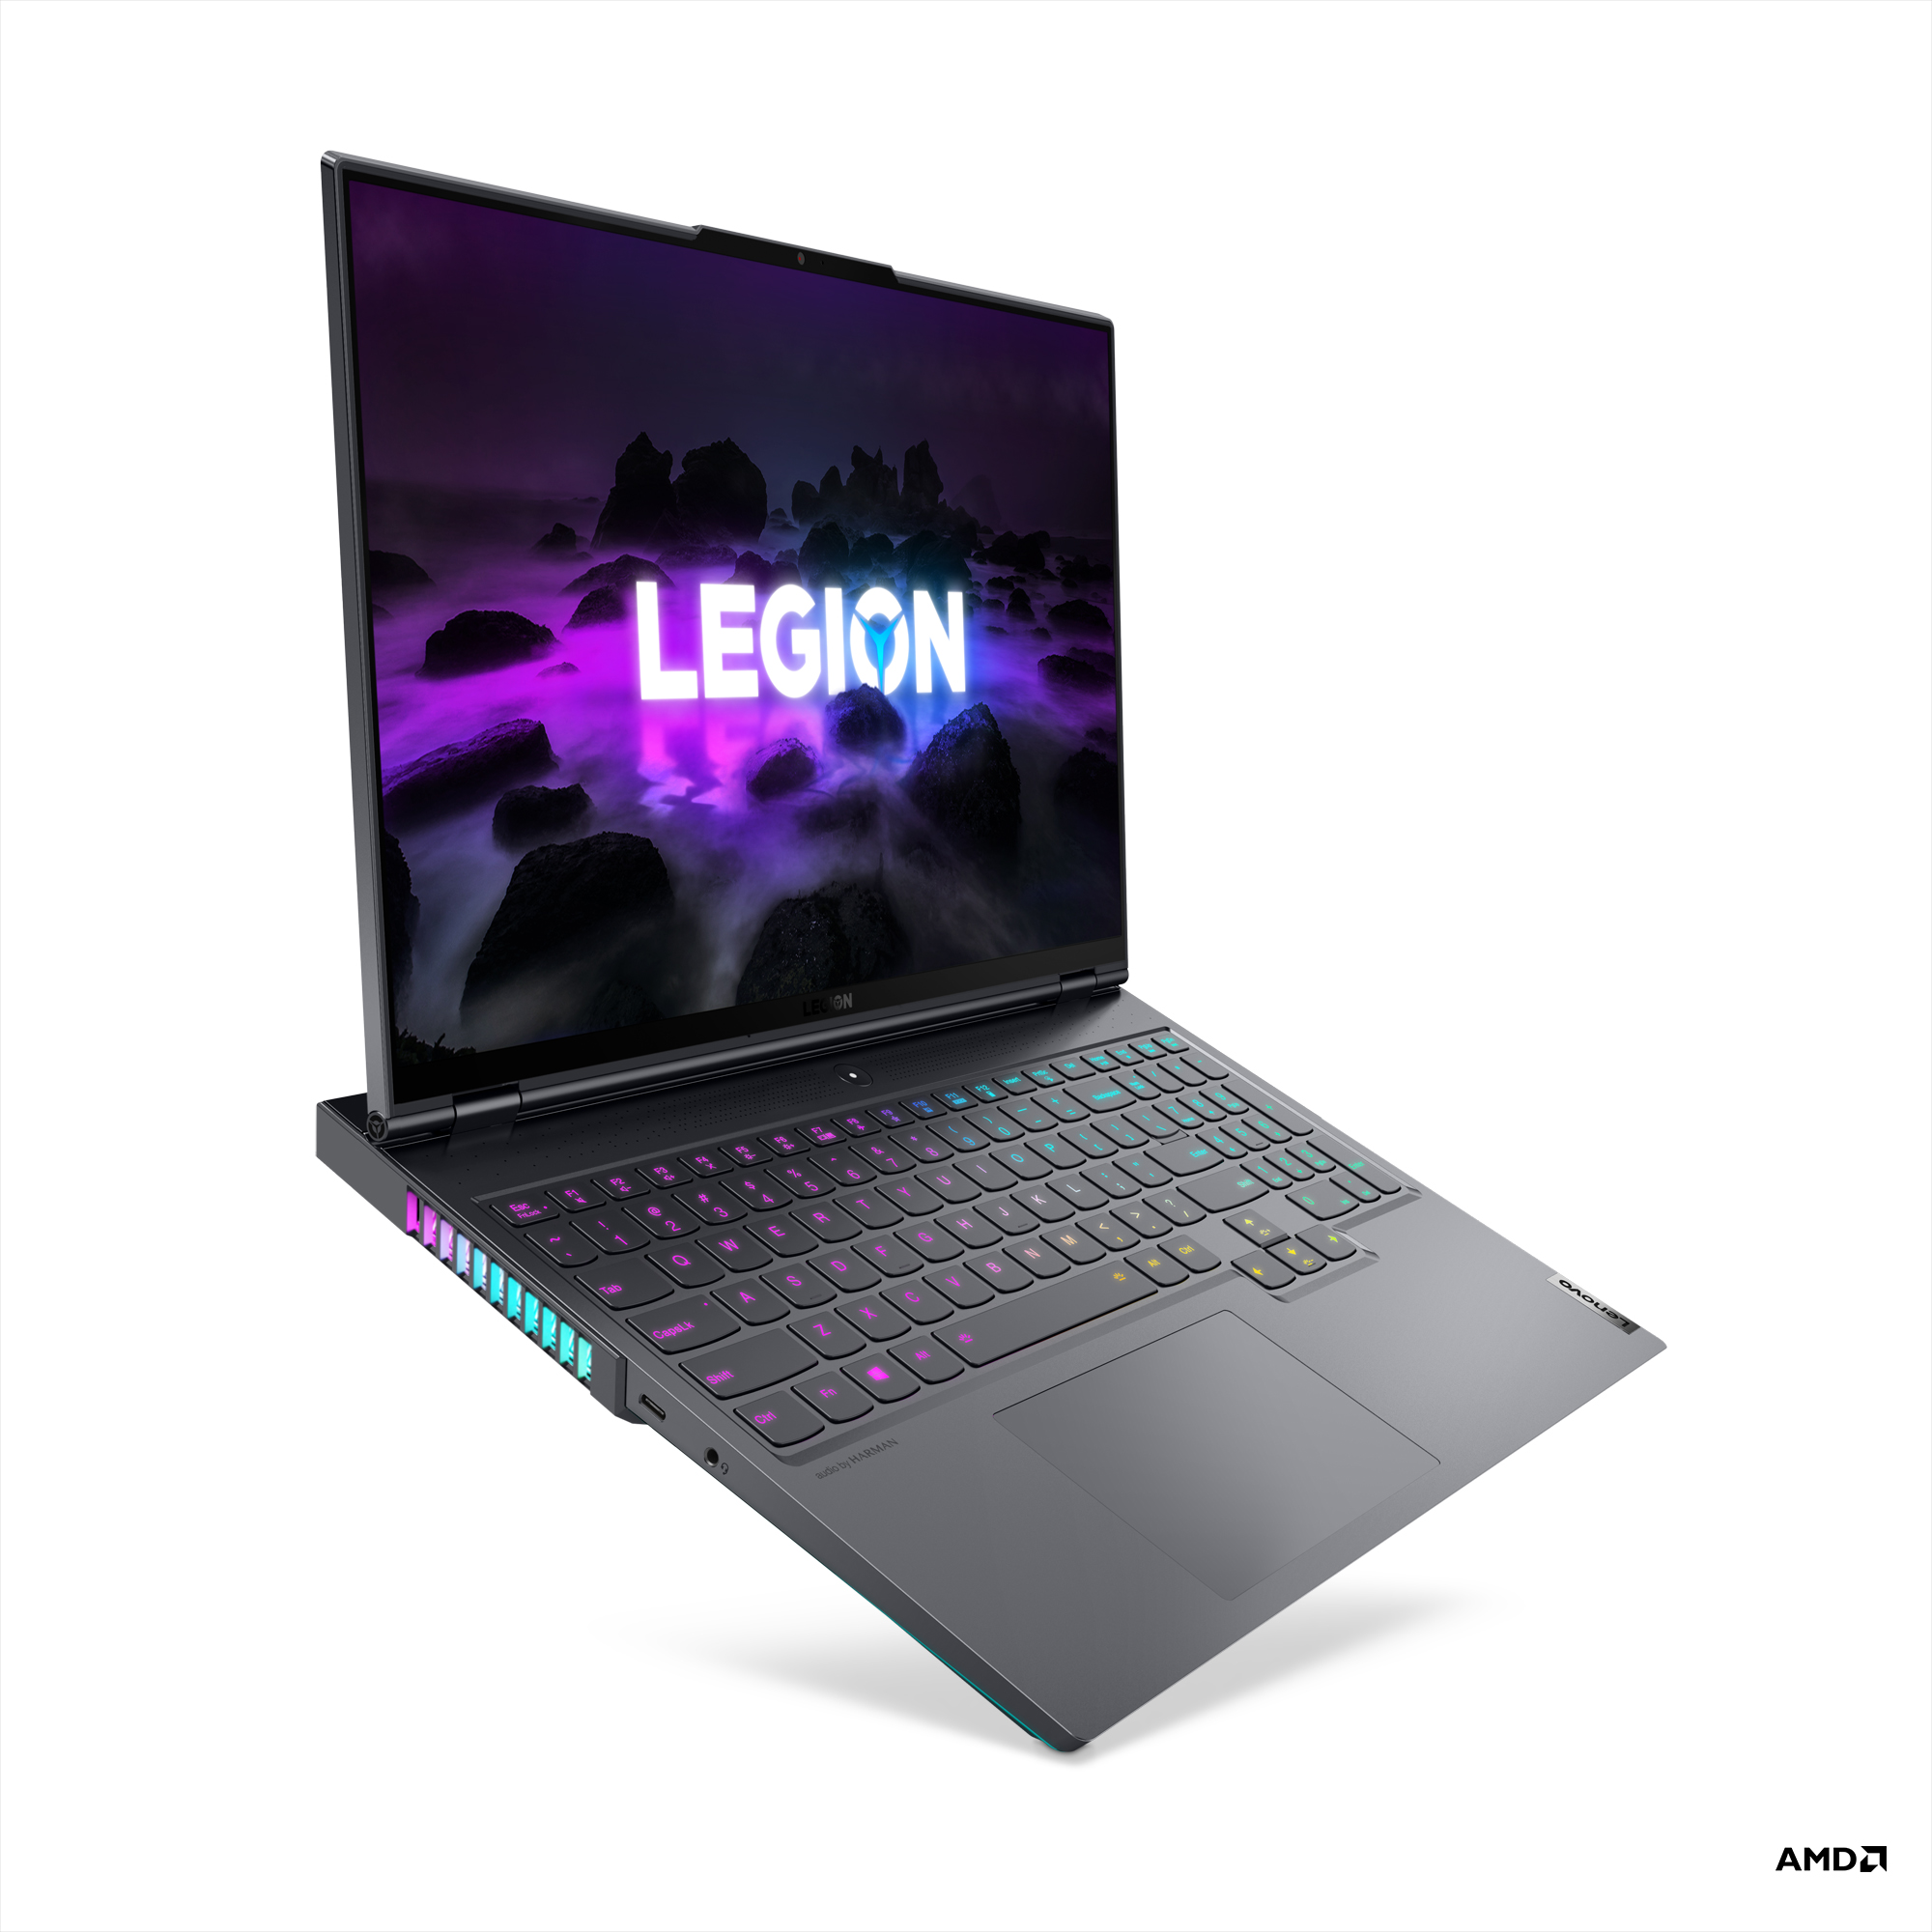 Lenovo Legion 7 (2021) and Arch Linux